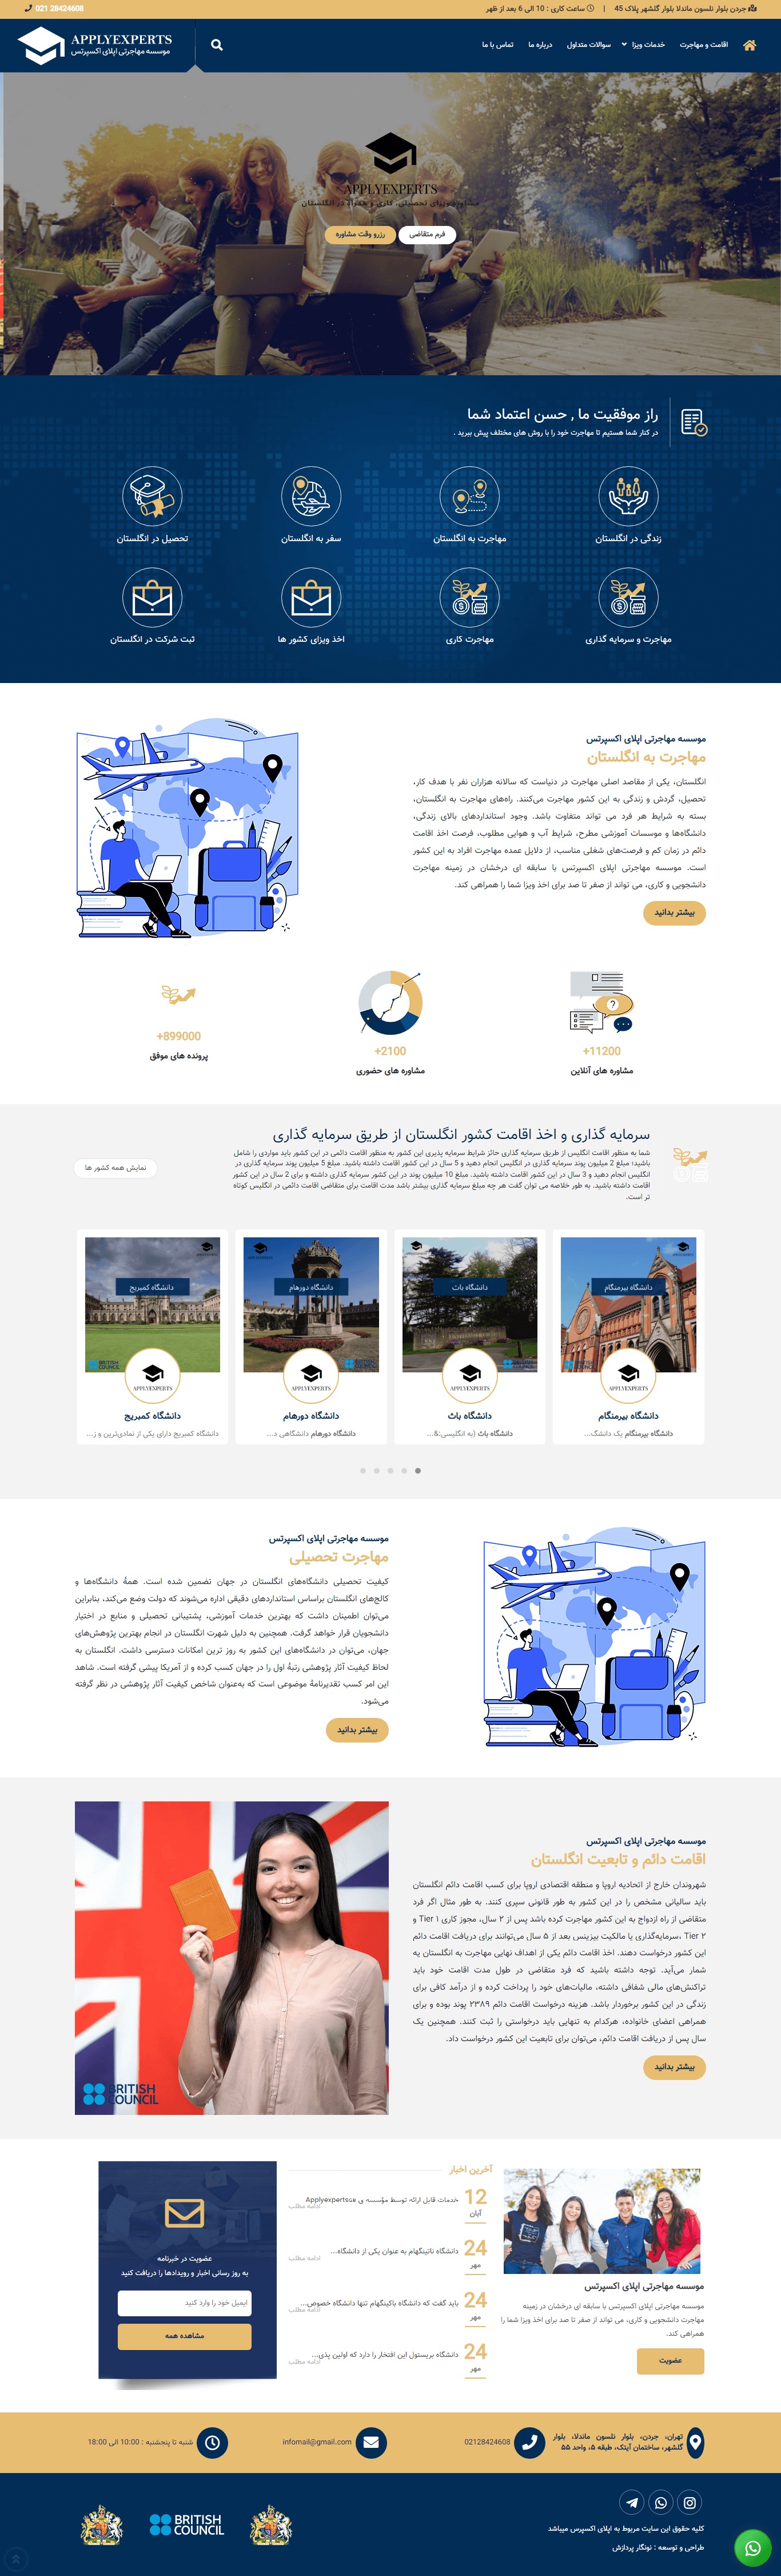 طراحی سایت موسسه مهاجرتی اپلای اکسپرتس